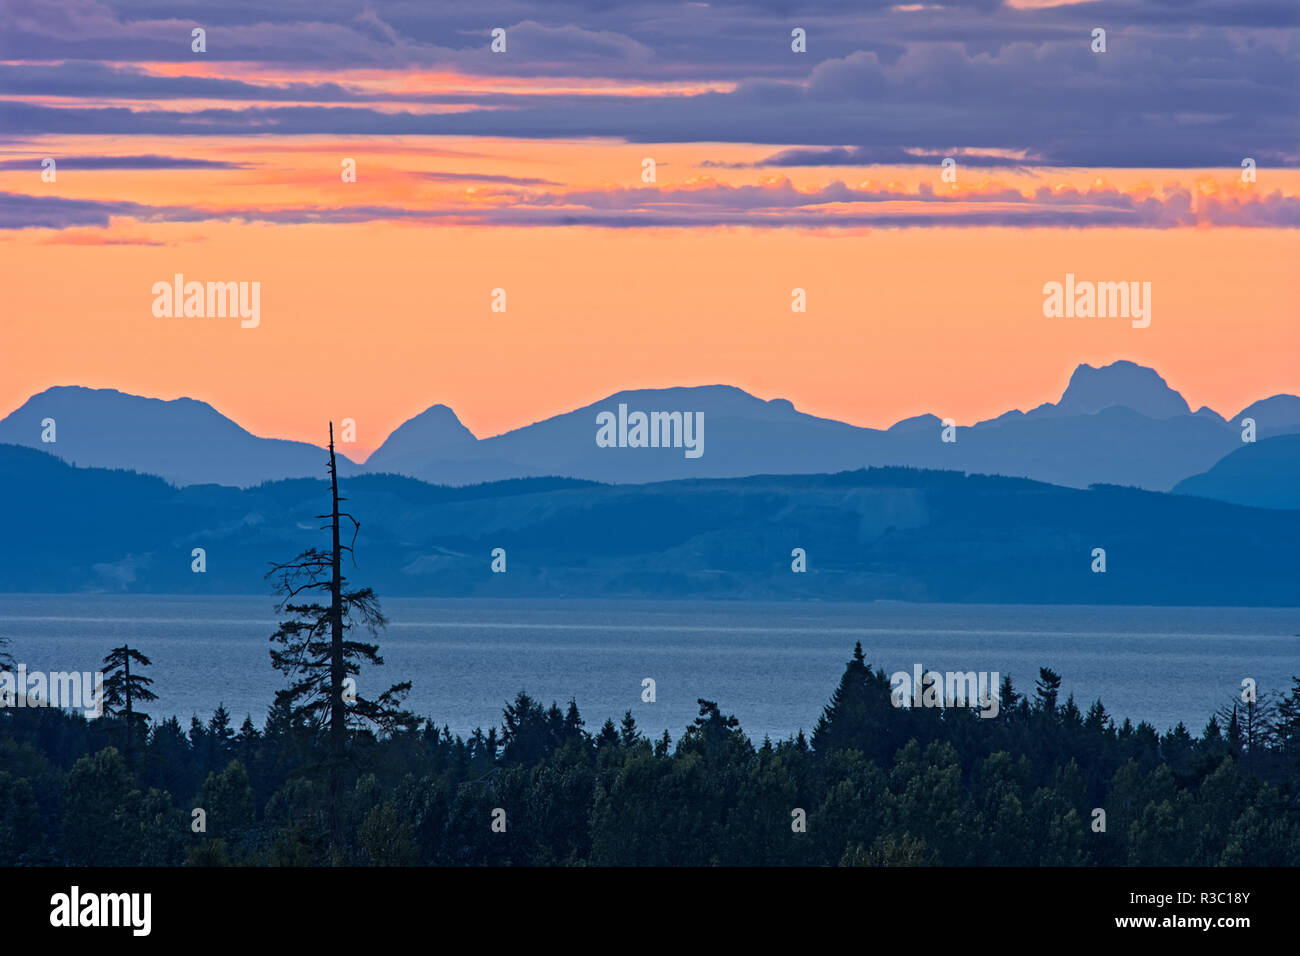 Canada, British Columbia, Vancouver Island. Sunset on Strait of Georgia. Stock Photo